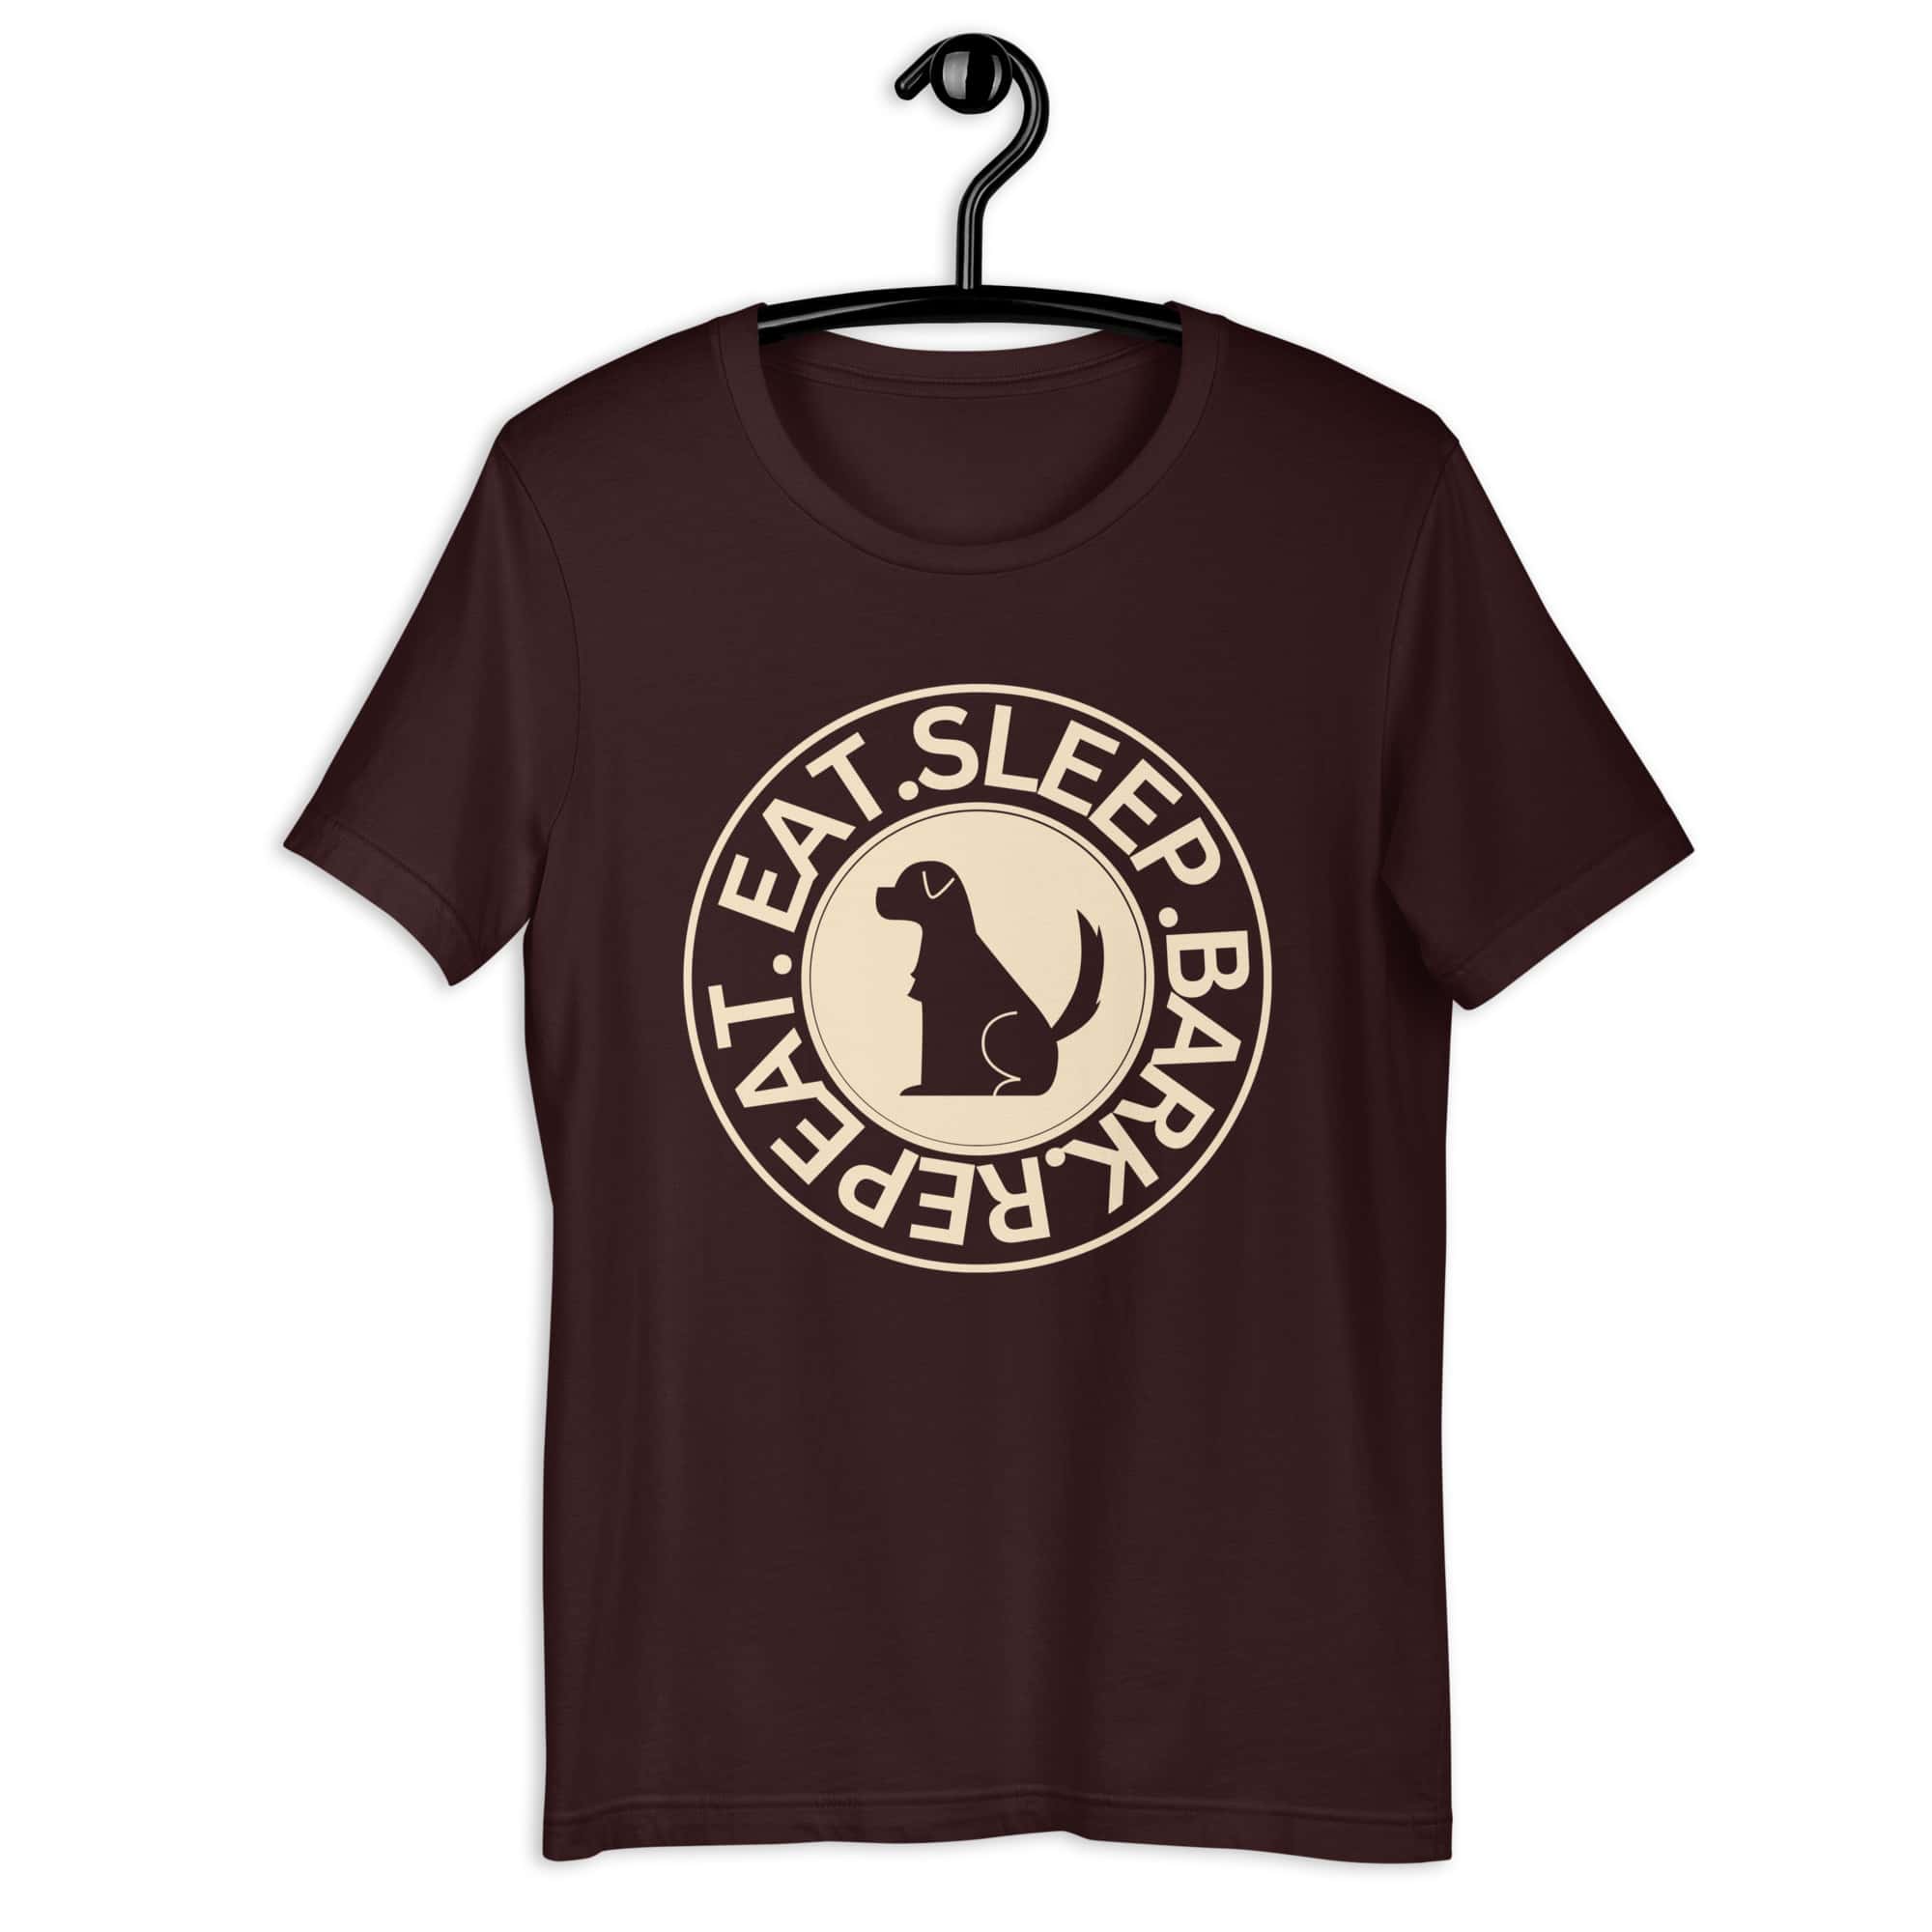 Eat Sleep Bark Repeat Ansylvanian Hound Unisex T-Shirt. Black Oxblood